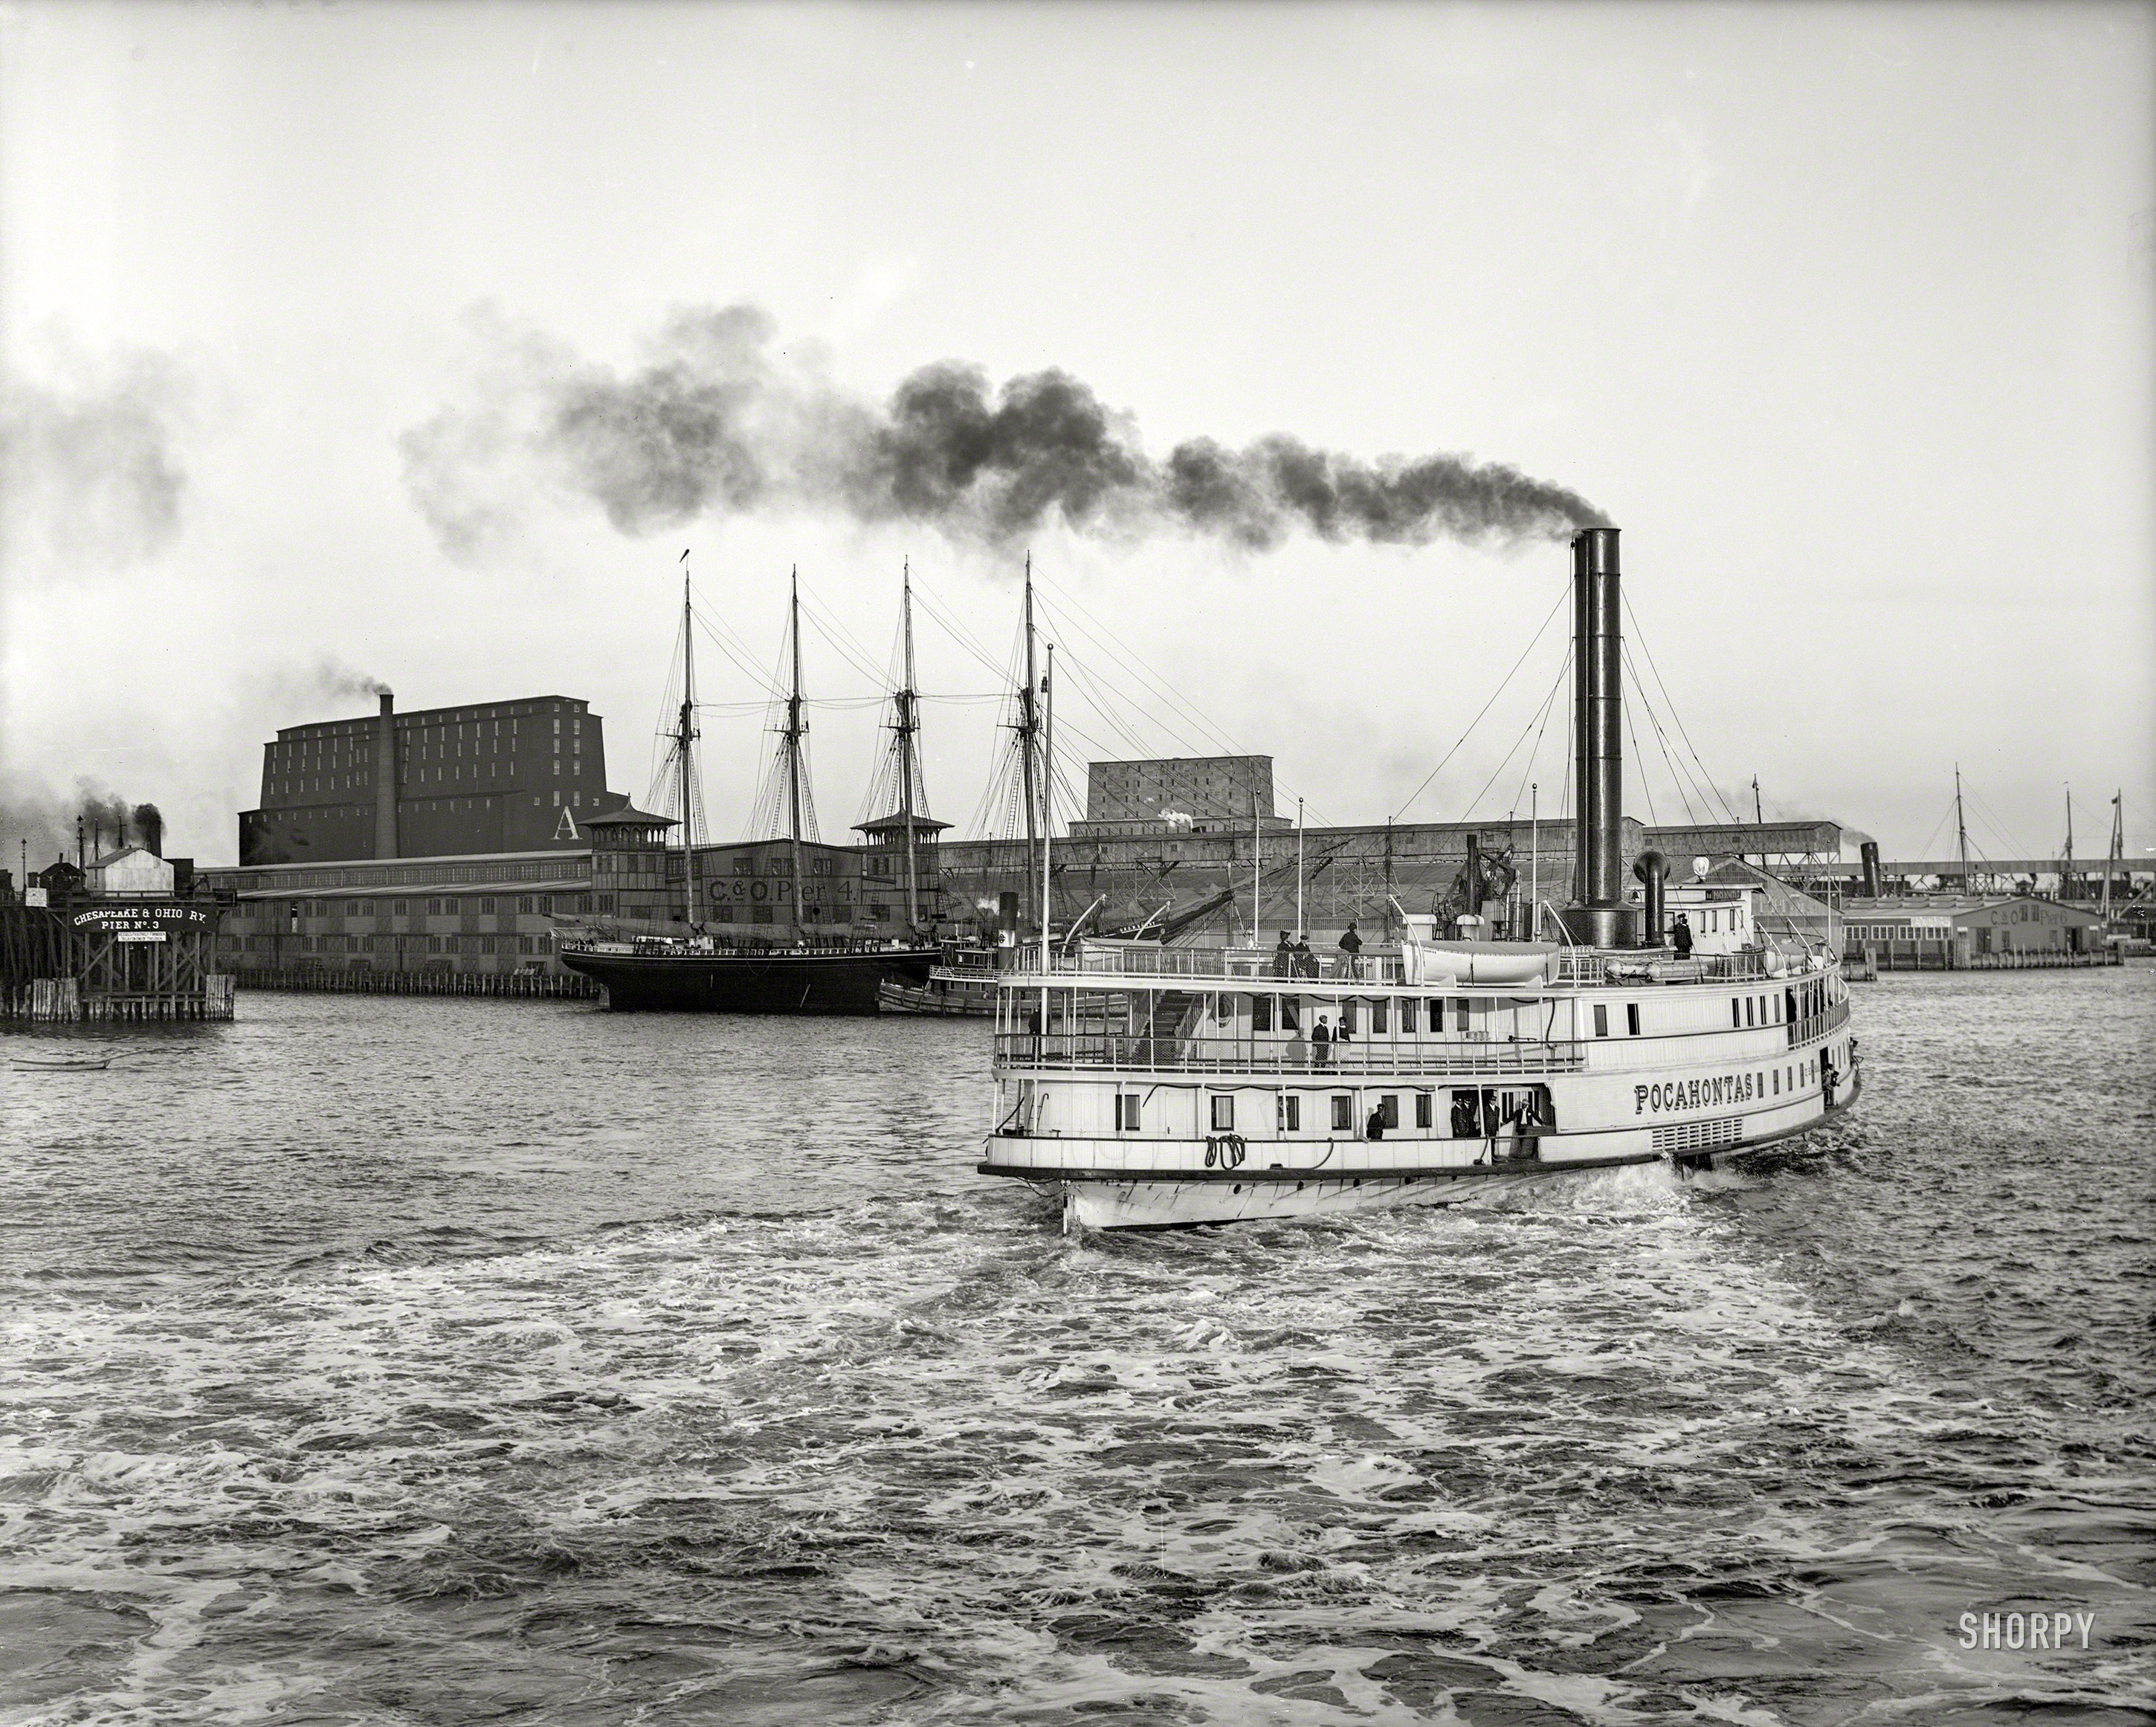 Newport News, Virginia, circa 1907. "C.&O. (Chesapeake and Ohio Railway Company) piers. Sidewheeler ferry Pocahontas." 8x10 inch dry plate glass negative, Detroit Publishing Company. View full size.